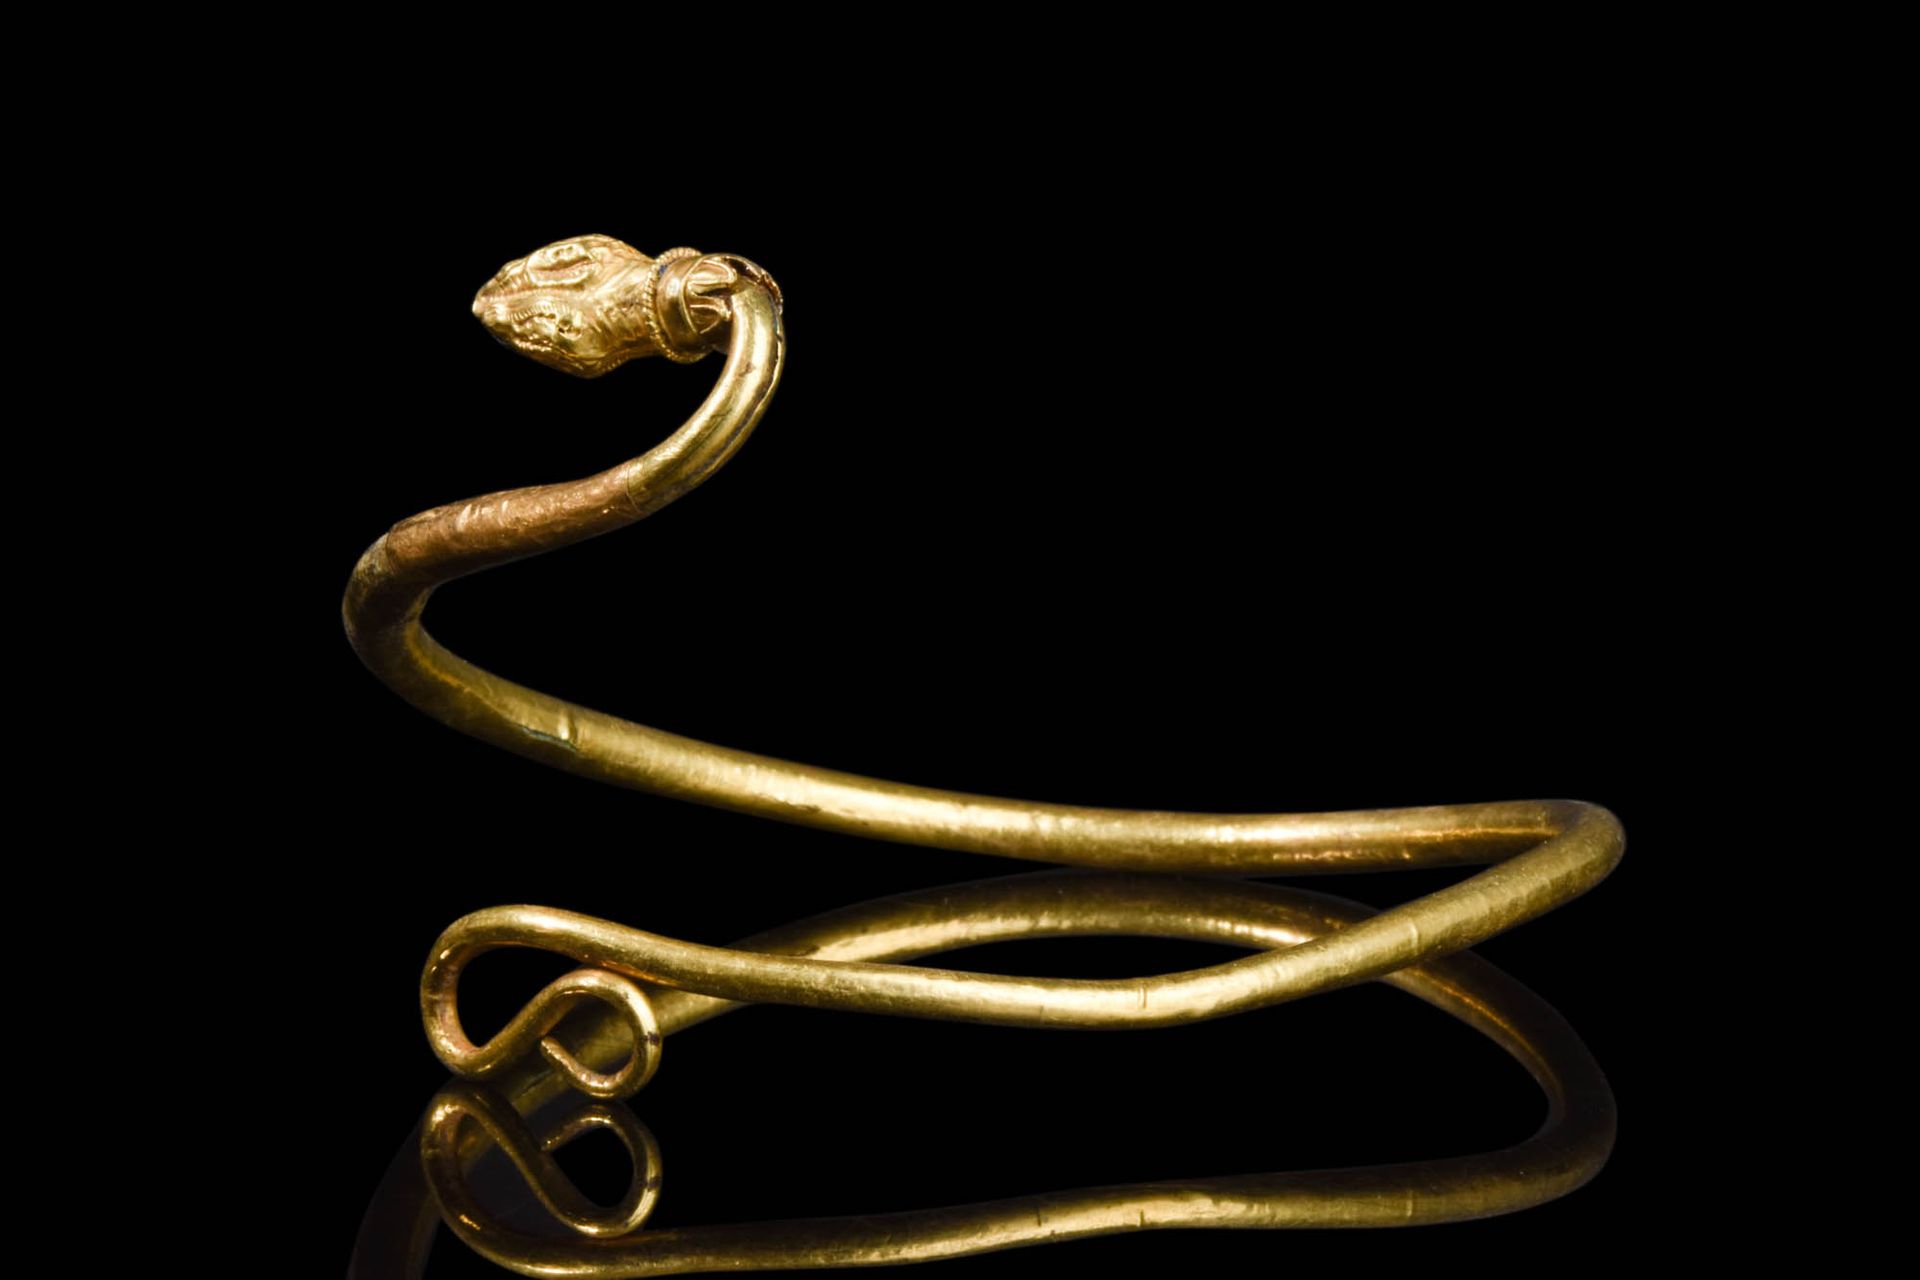 HEAVY PTOLEMAIC GOLD ARM RING 托勒密时期，约公元前 525 - 30 年。公元前 525 - 30 年。
这是一枚厚重的黄金螺旋蛇&hellip;